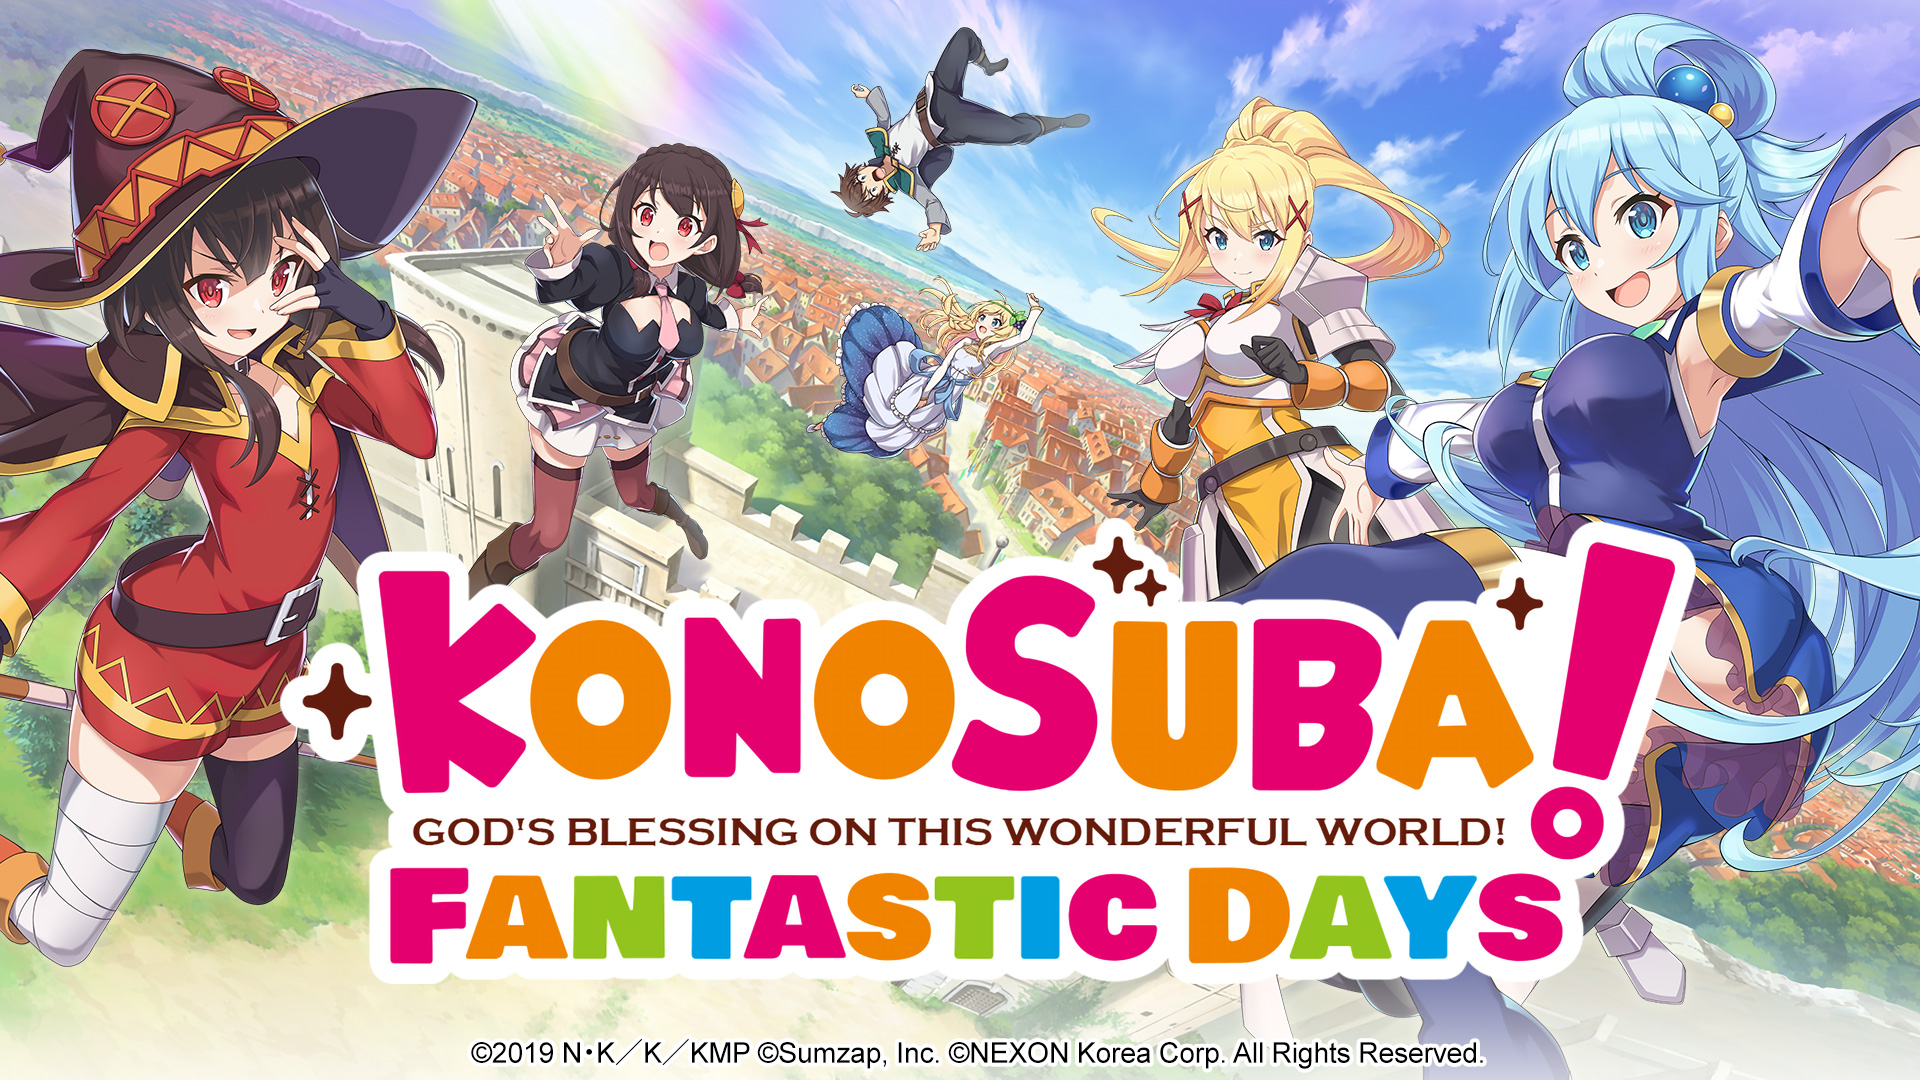 KONOSUBA-God's blessing on this wonderful world!